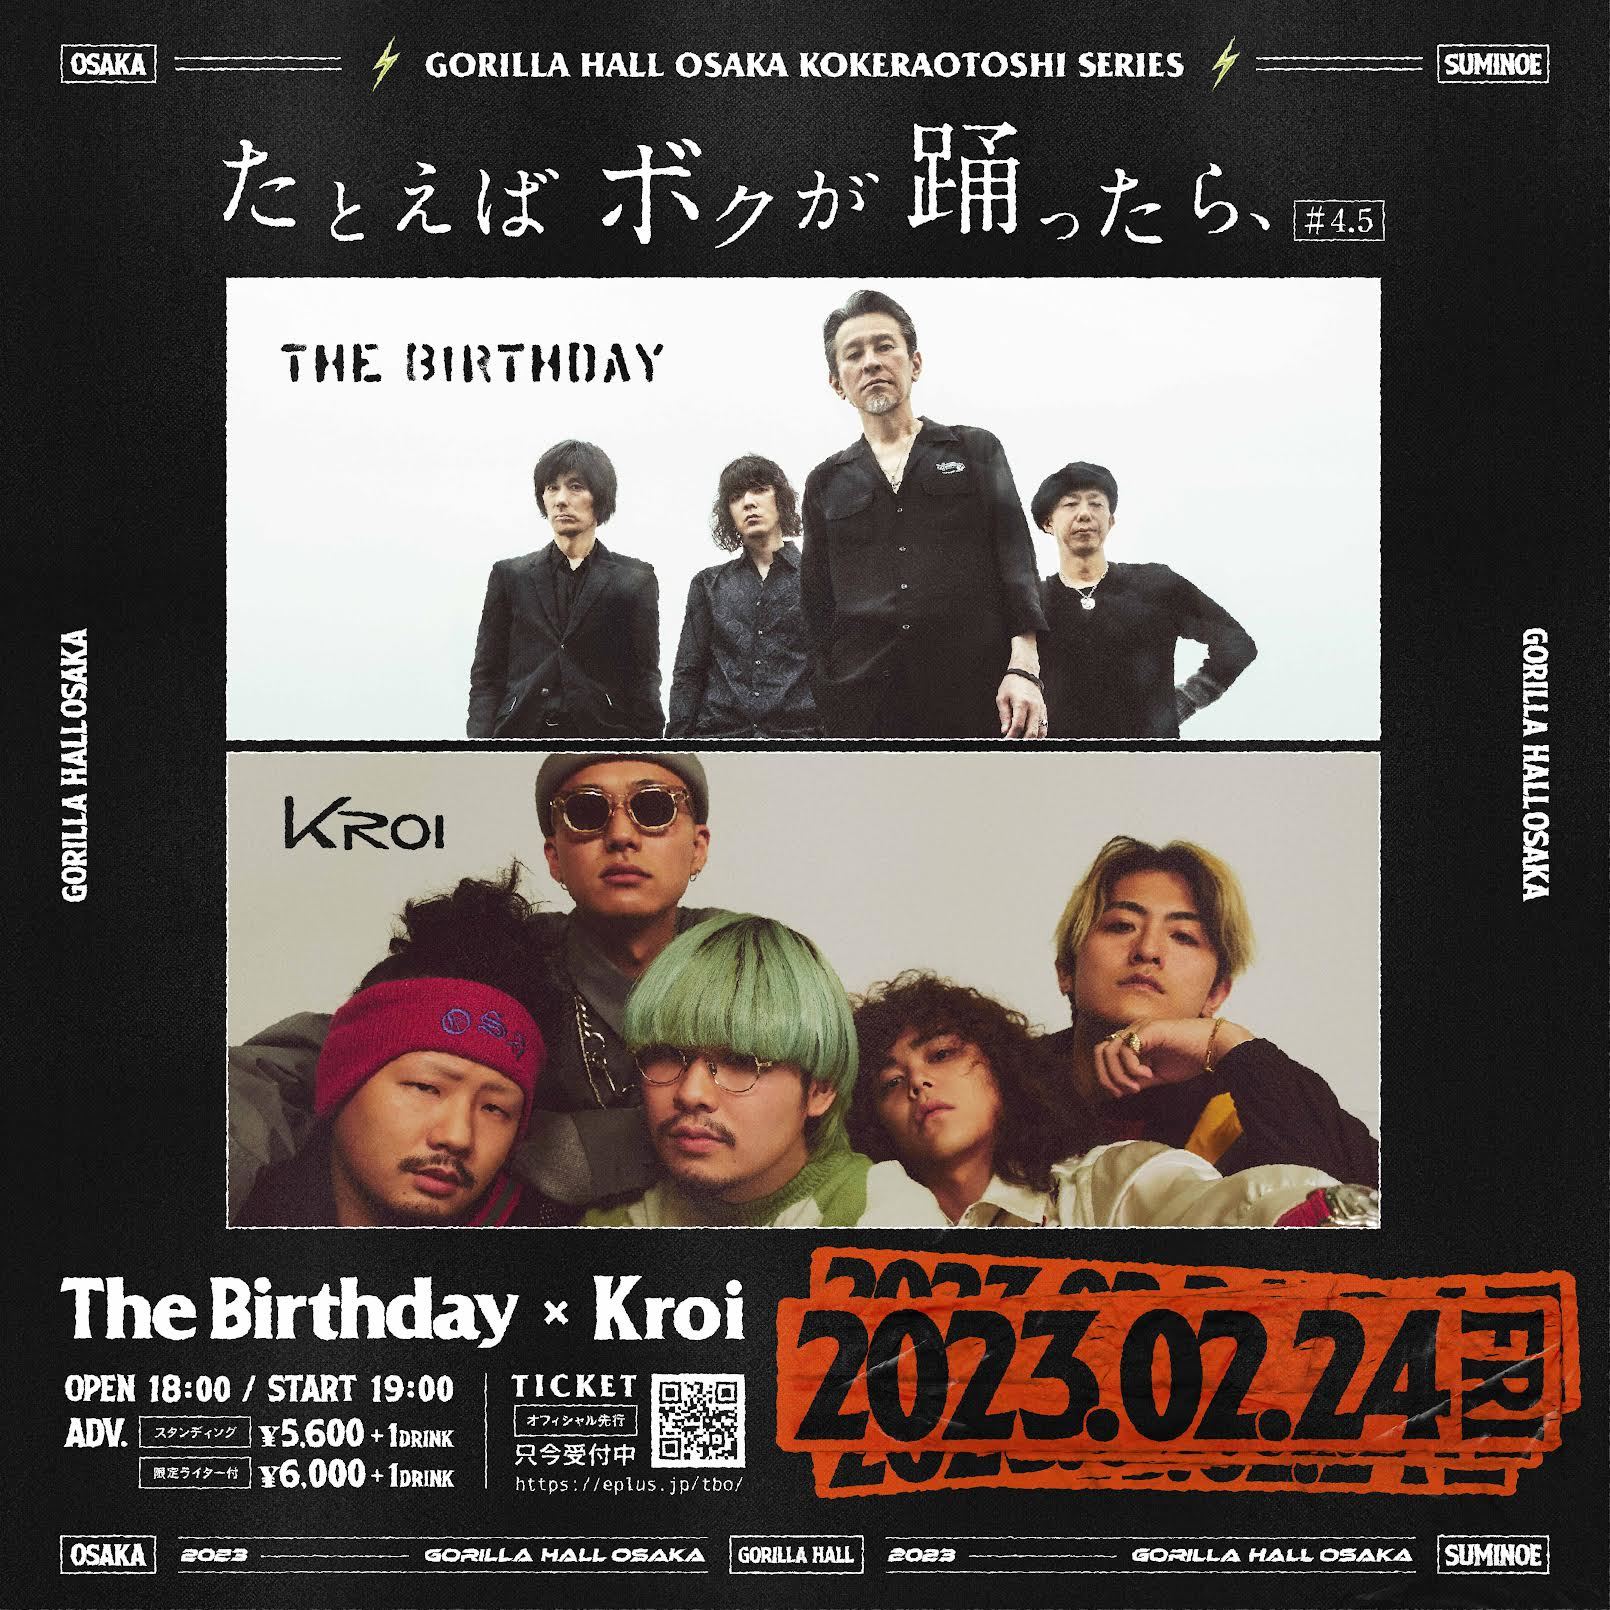 『The Birthday × Kroi GORILLA HALL OSAKA KOKERAOTOSHI series たとえばボクが踊ったら、＃4.5』